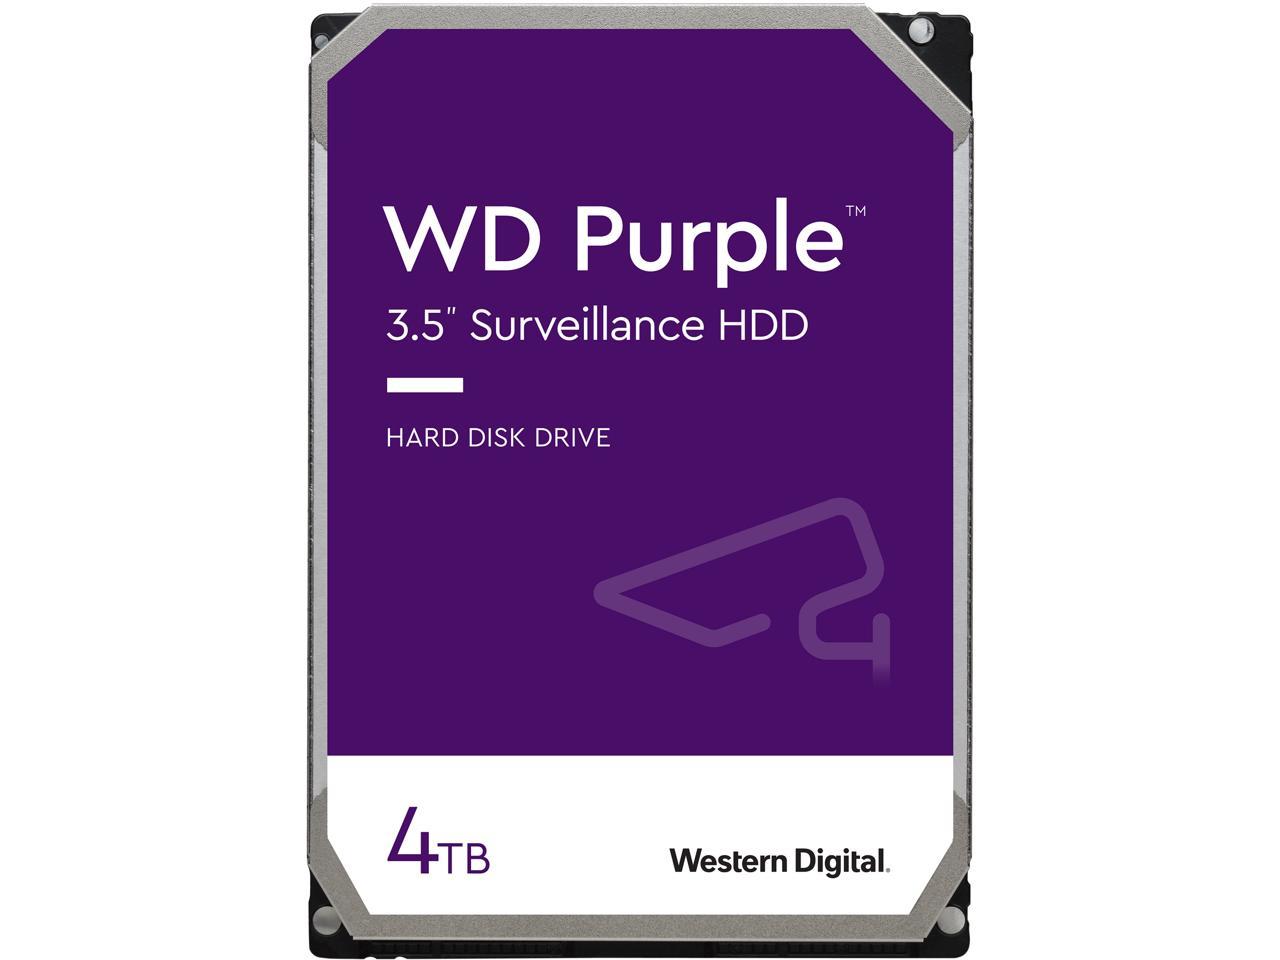 4TB WD Purple Surveillance Hard Drive @Newegg $80